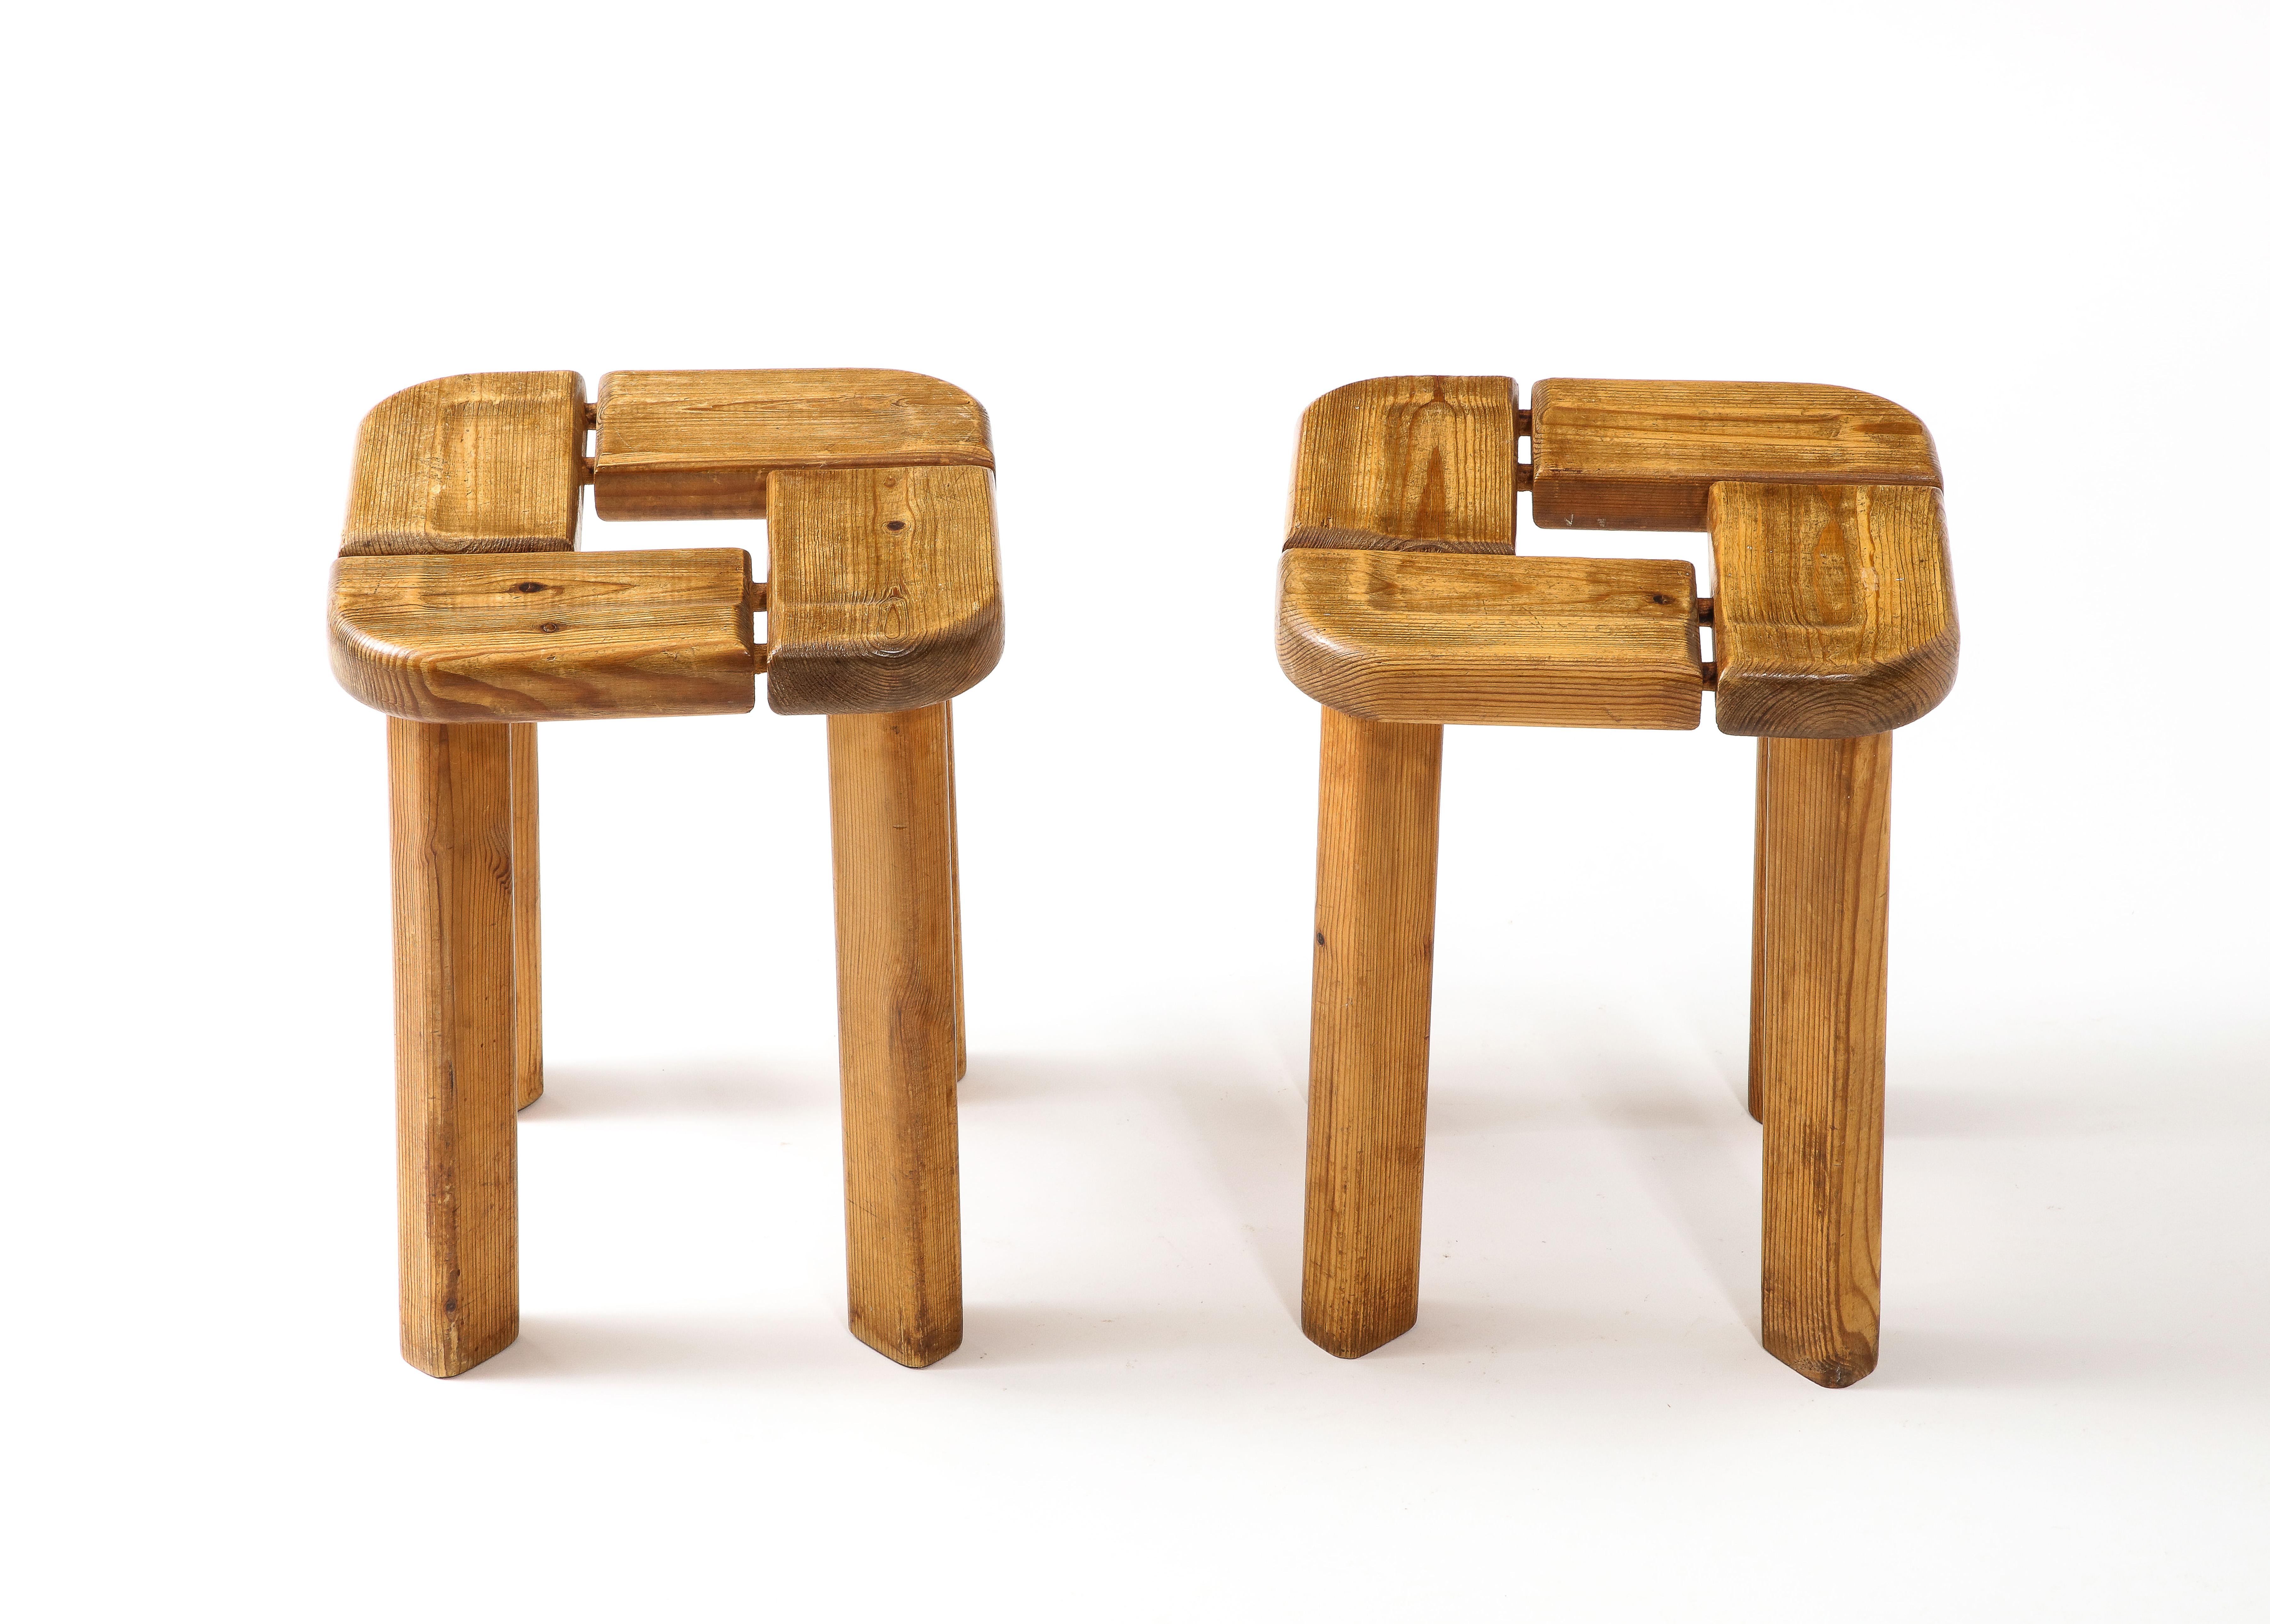 Solid pine stools in original patina.